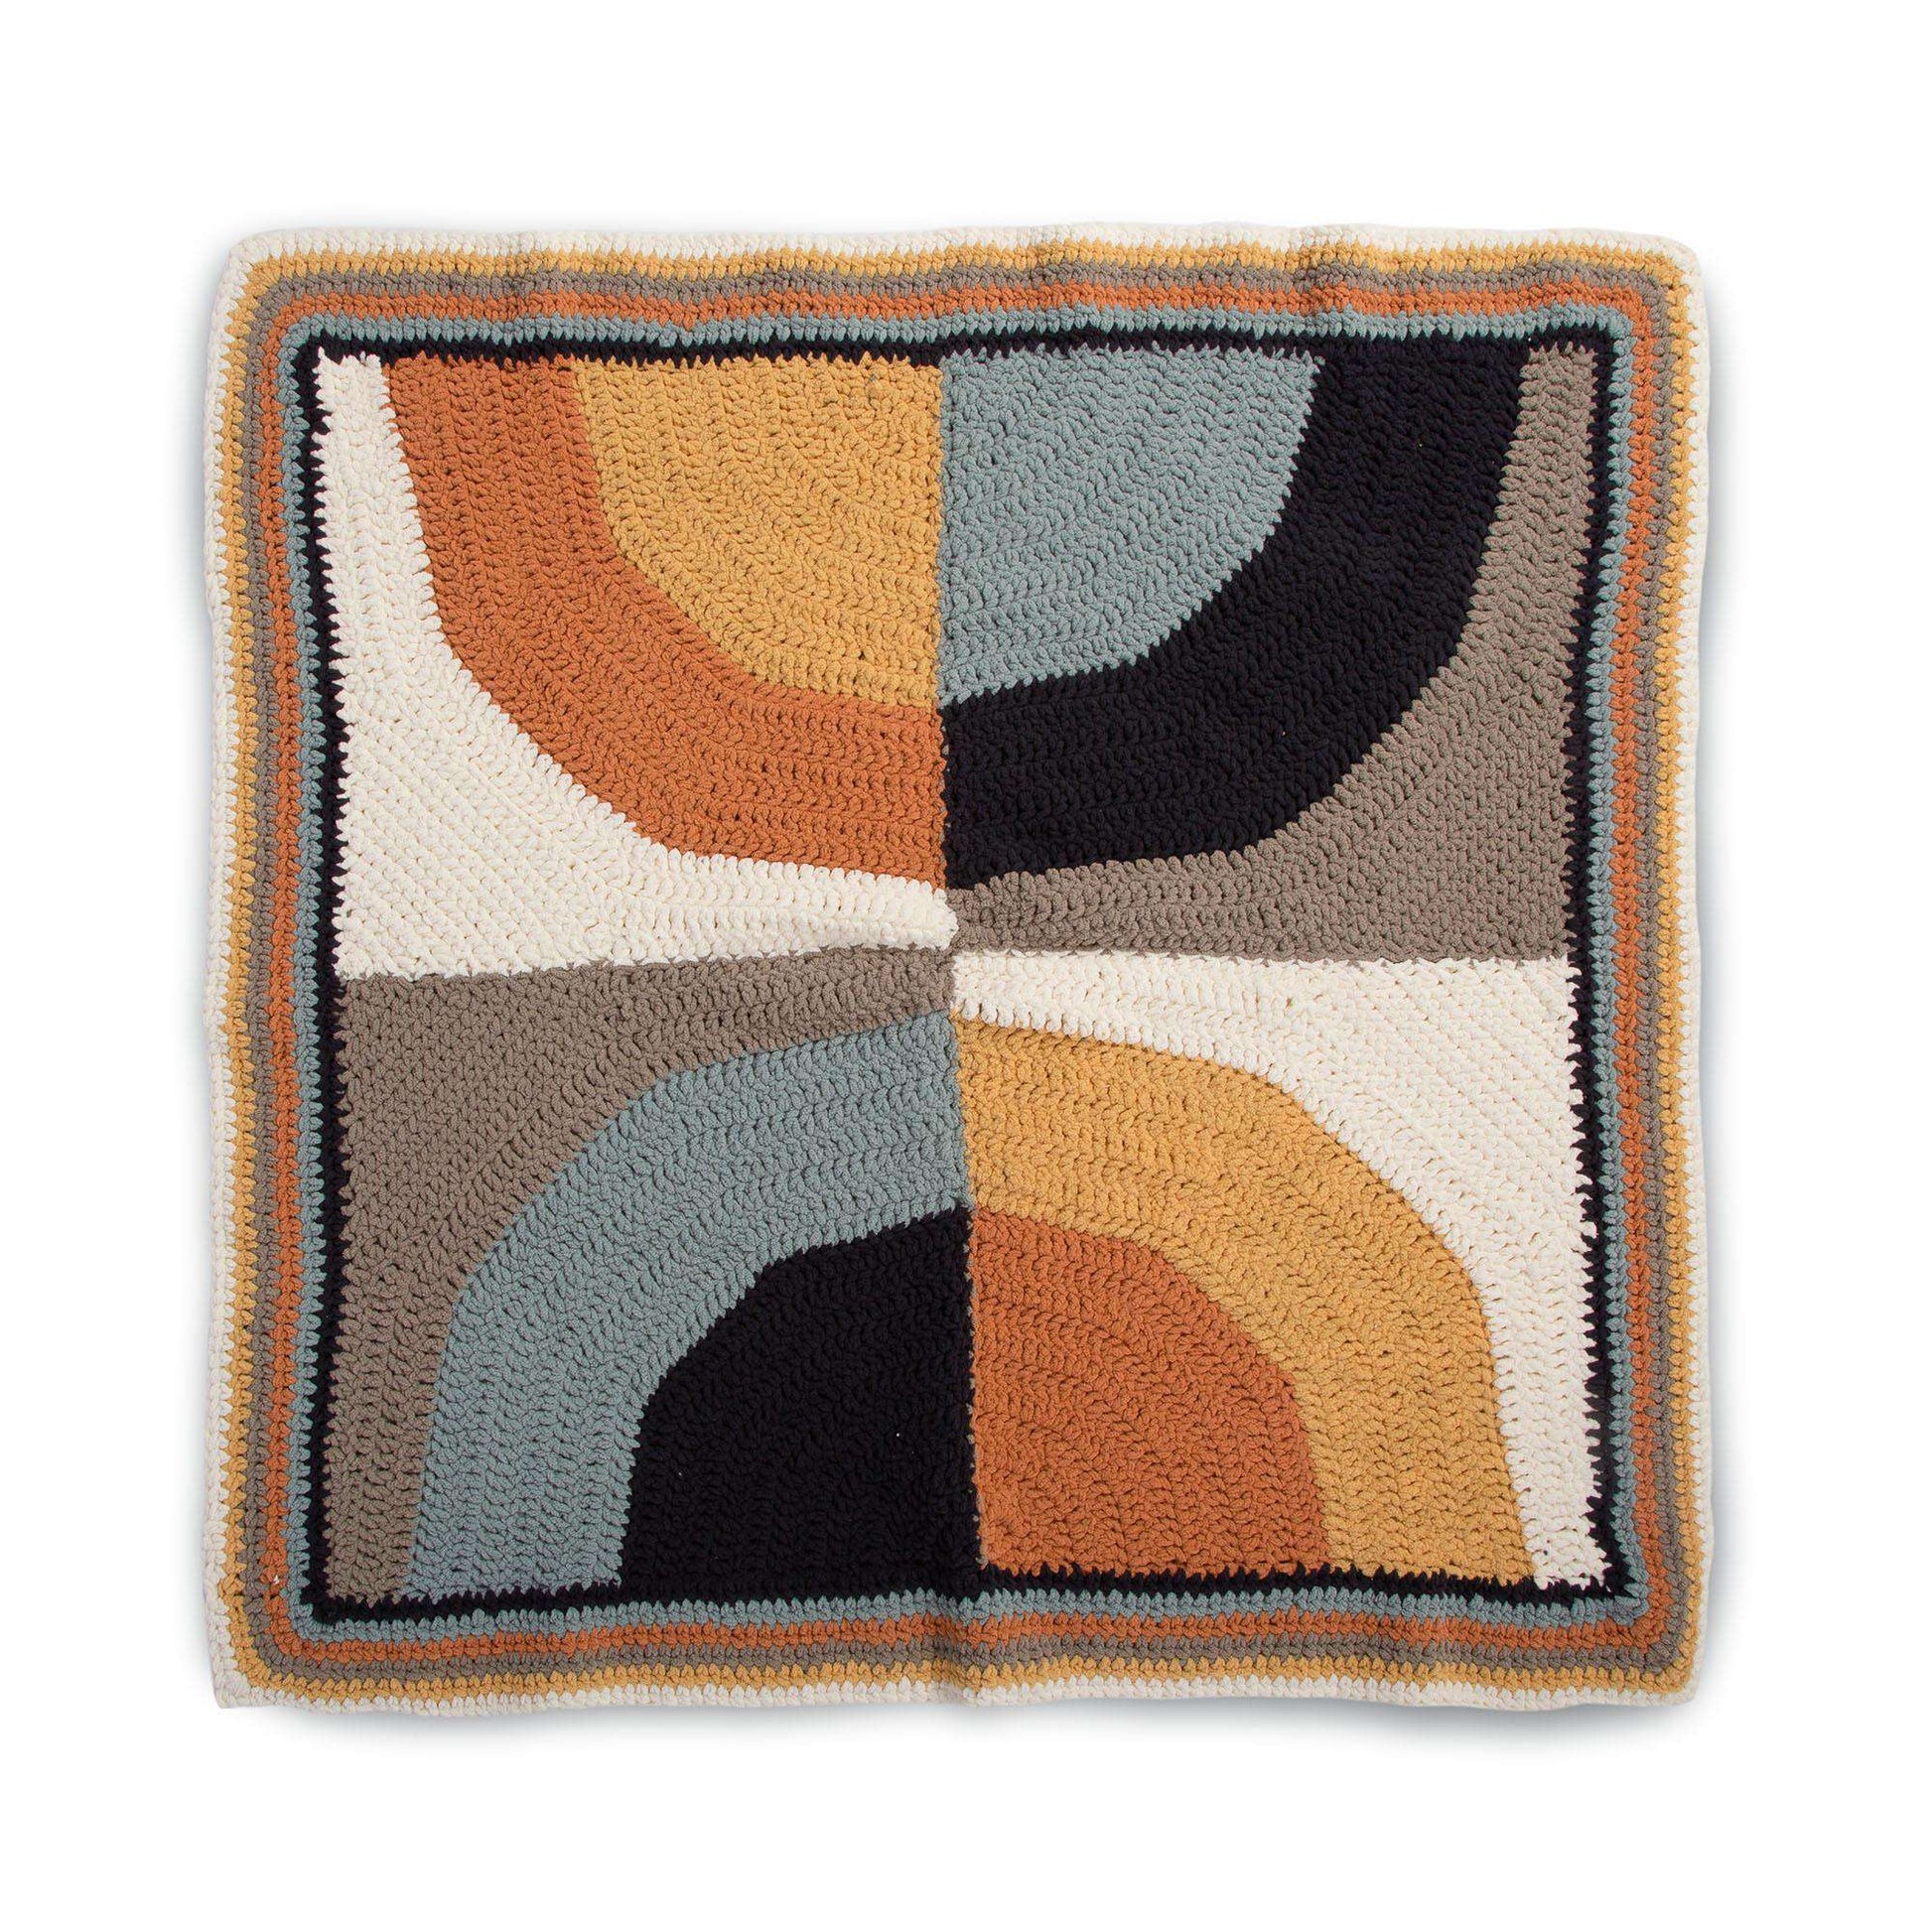 Free Bernat Crochet Moonrise Blanket Pattern